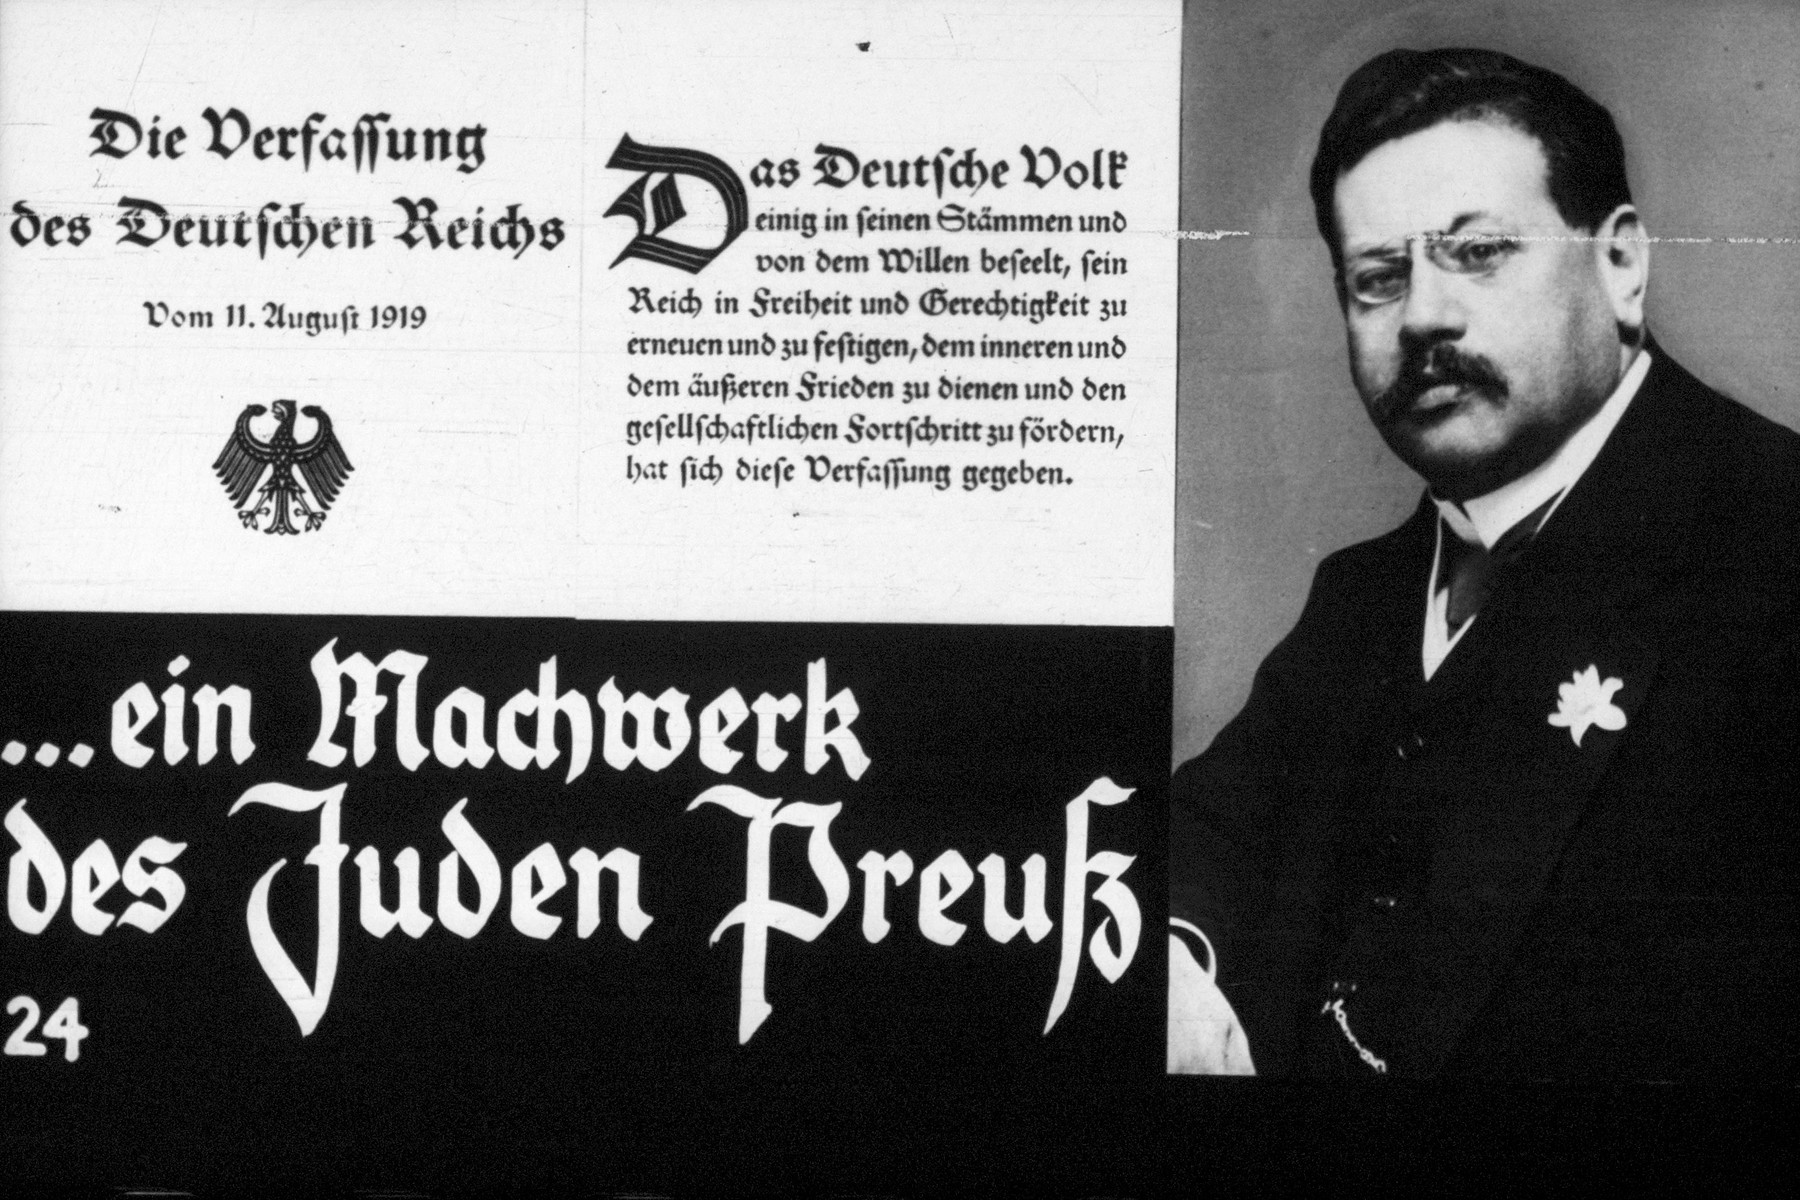 24th Nazi propaganda slide of a Hitler Youth educational presentation entitled "Germany Overcomes Jewry."

..ein Machwerk des Juden Preuß
//
.. A concoction of the Jewish Preuss